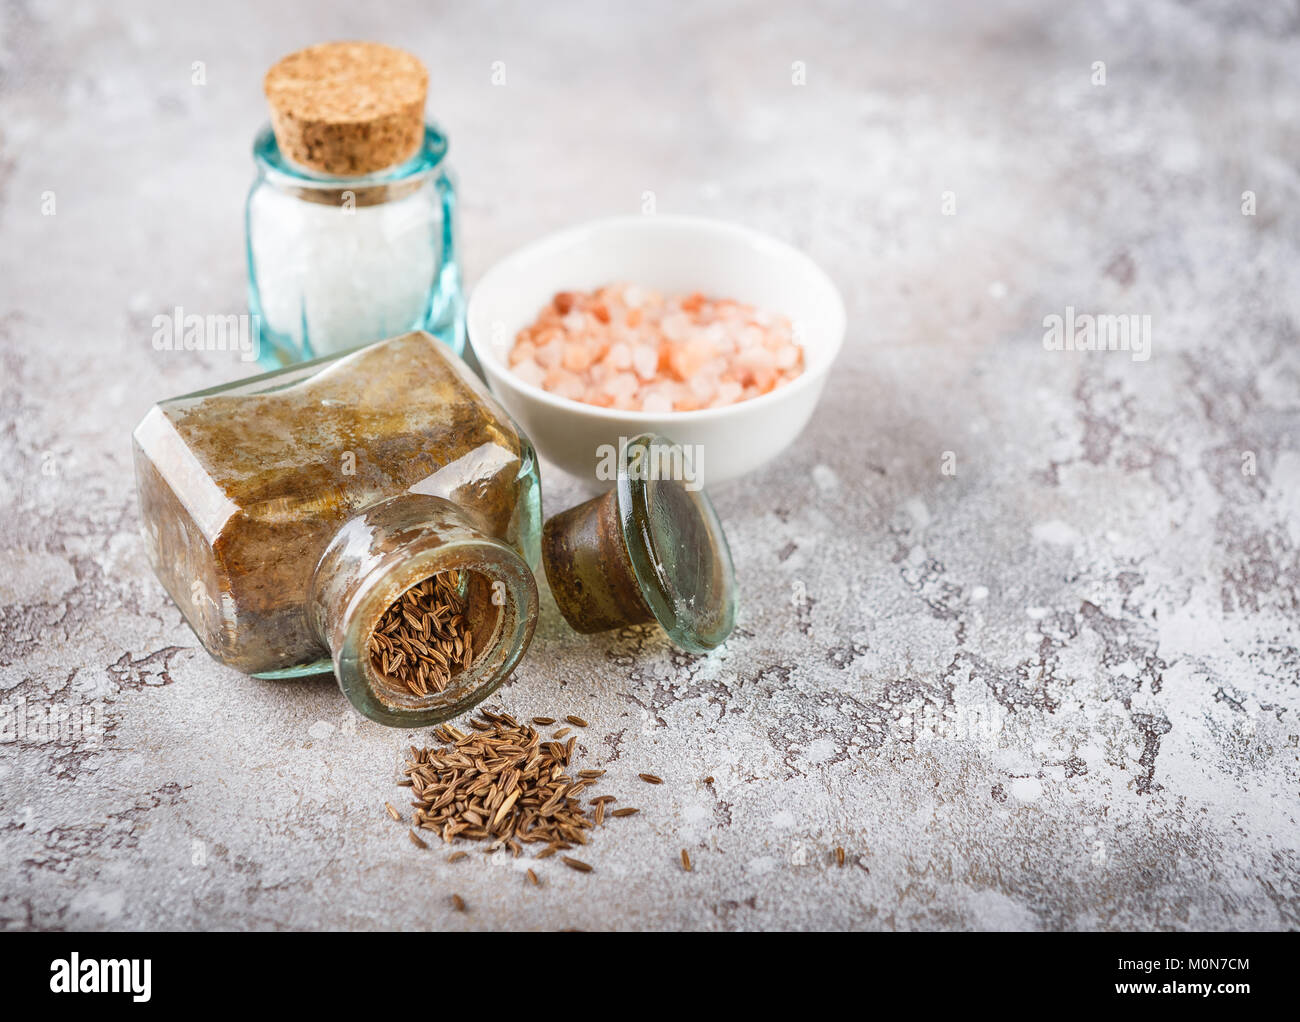 https://c8.alamy.com/comp/M0N7CM/cumin-seeds-in-a-glass-bottle-and-sea-salt-on-a-light-concrete-background-M0N7CM.jpg